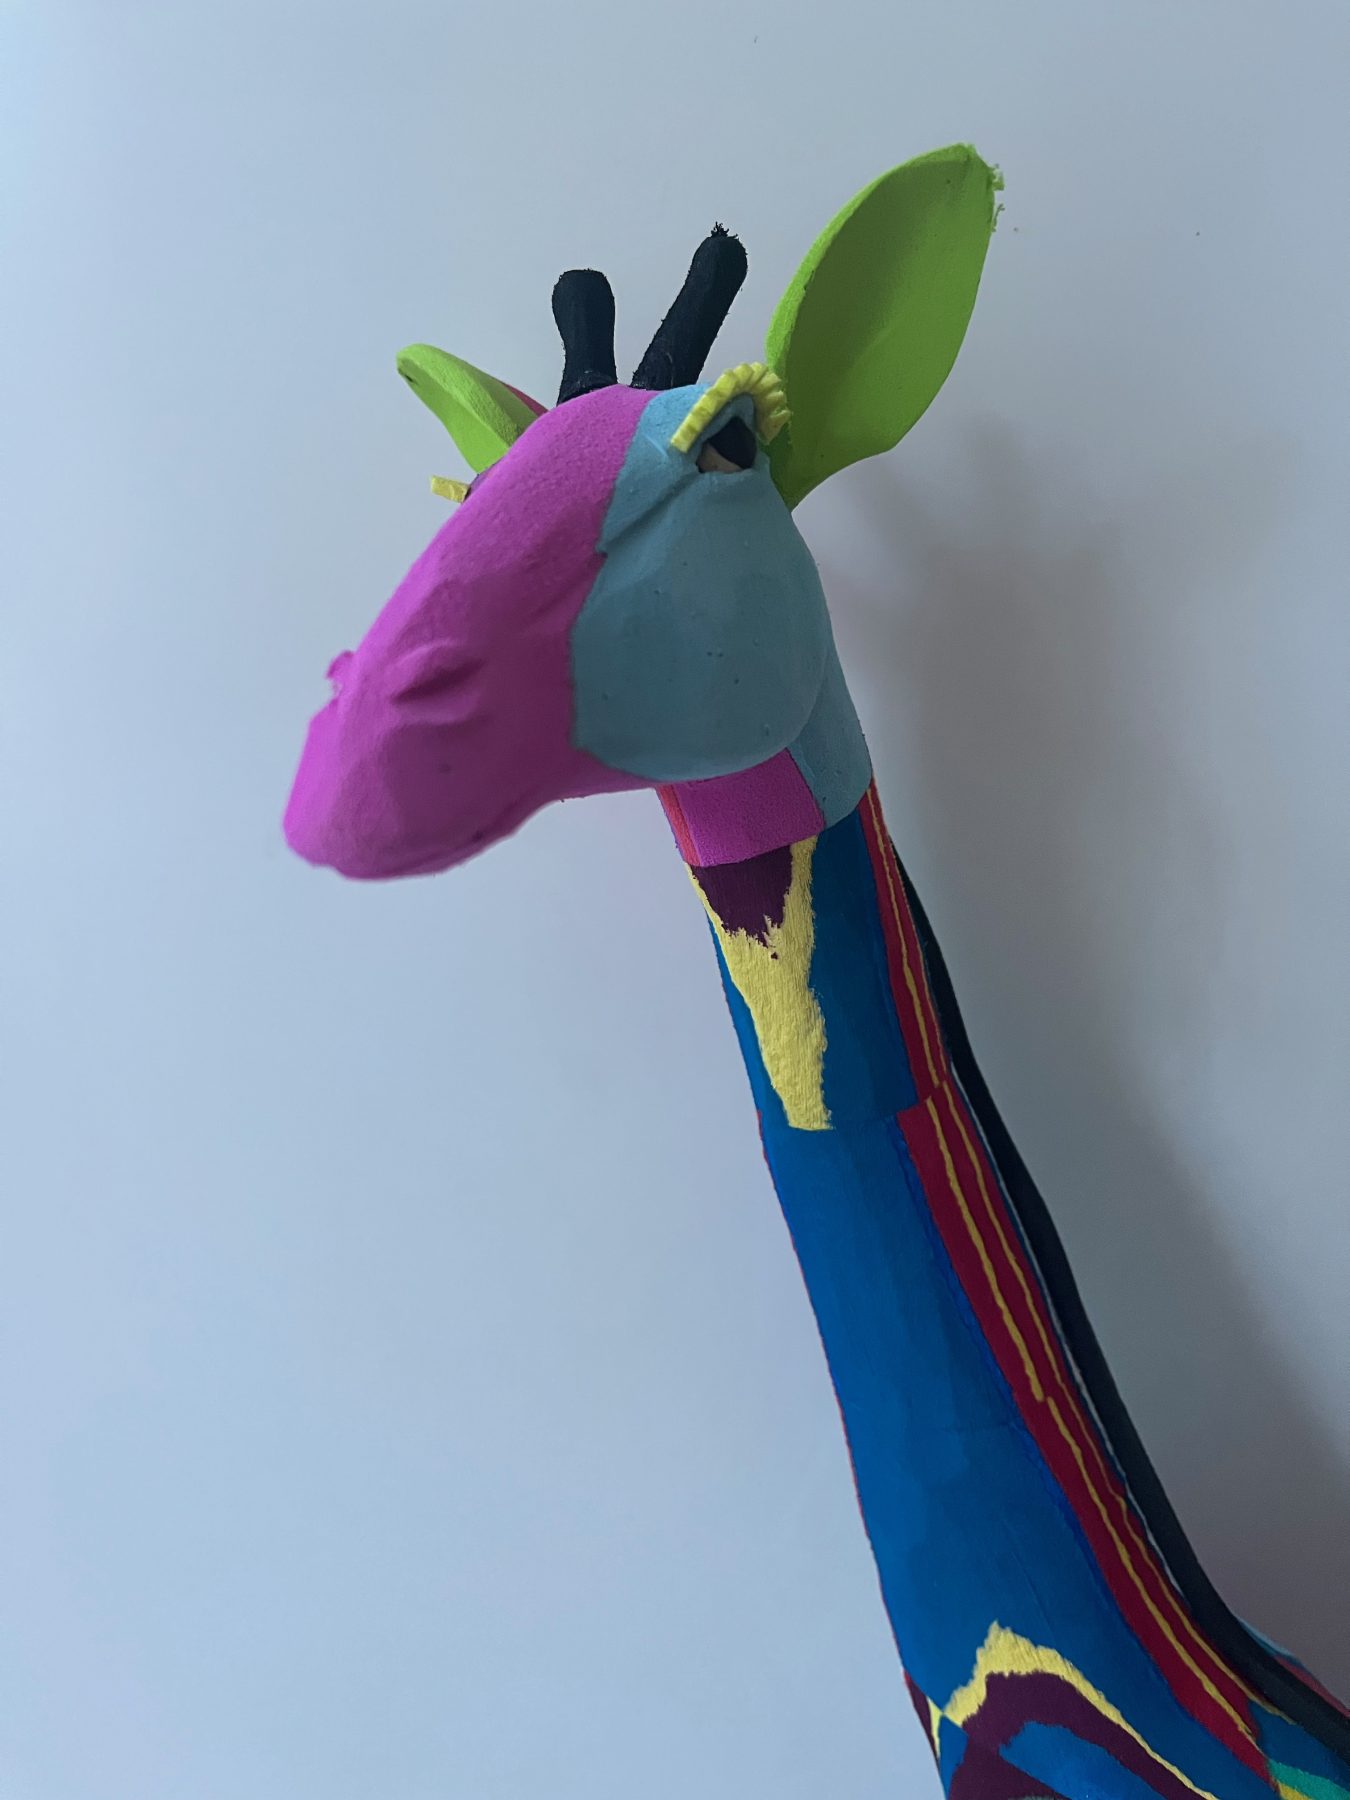 Giraffe -Recycled Flip-flops (M)